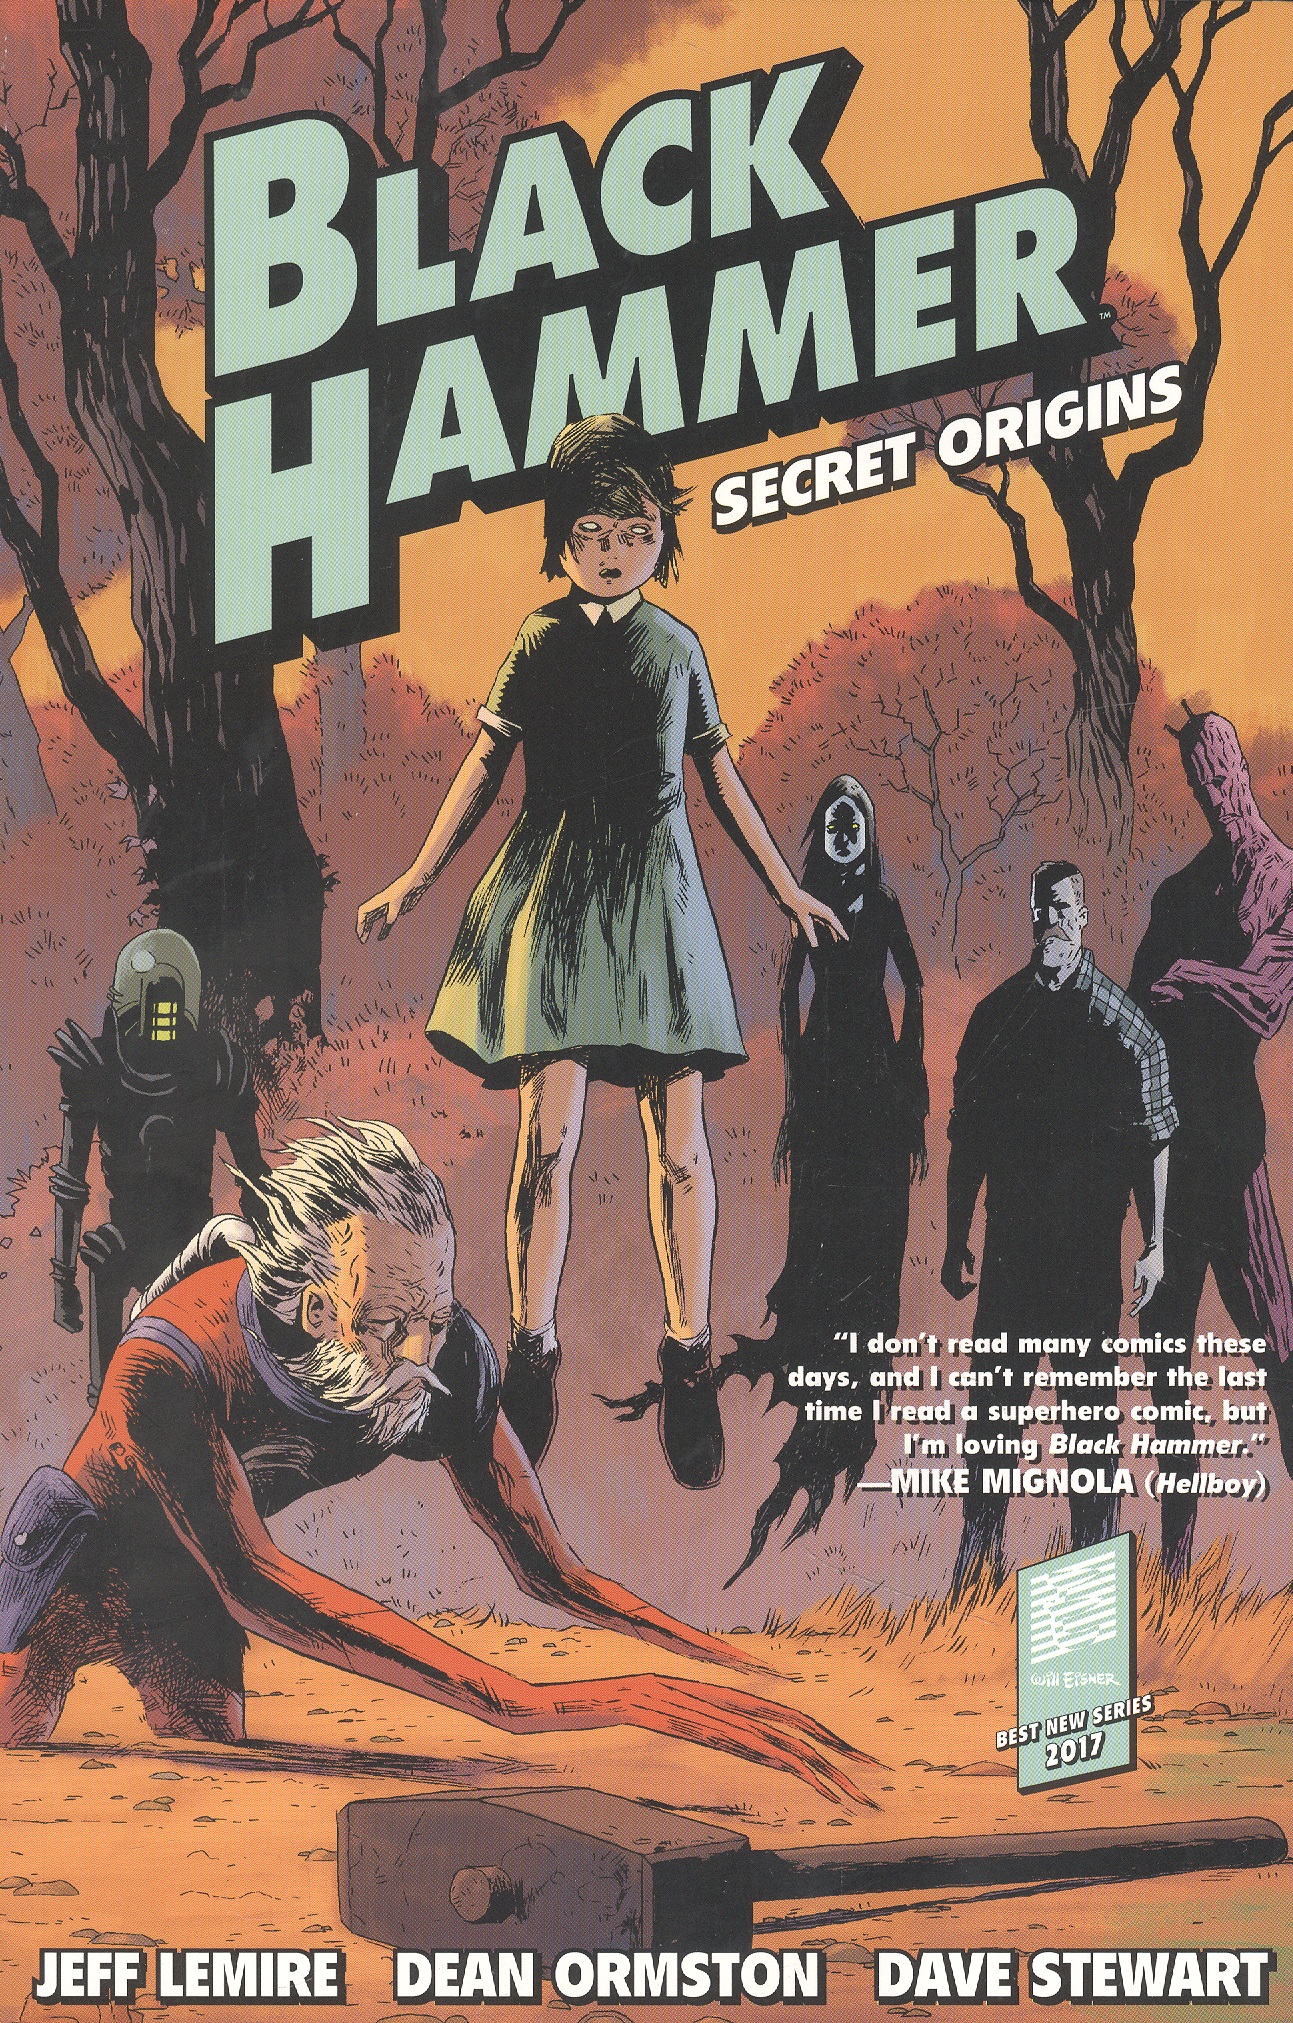 Лемир Джефф Black Hammer: Secret Origins lemire jeff black hammer volume 5 reborn part one